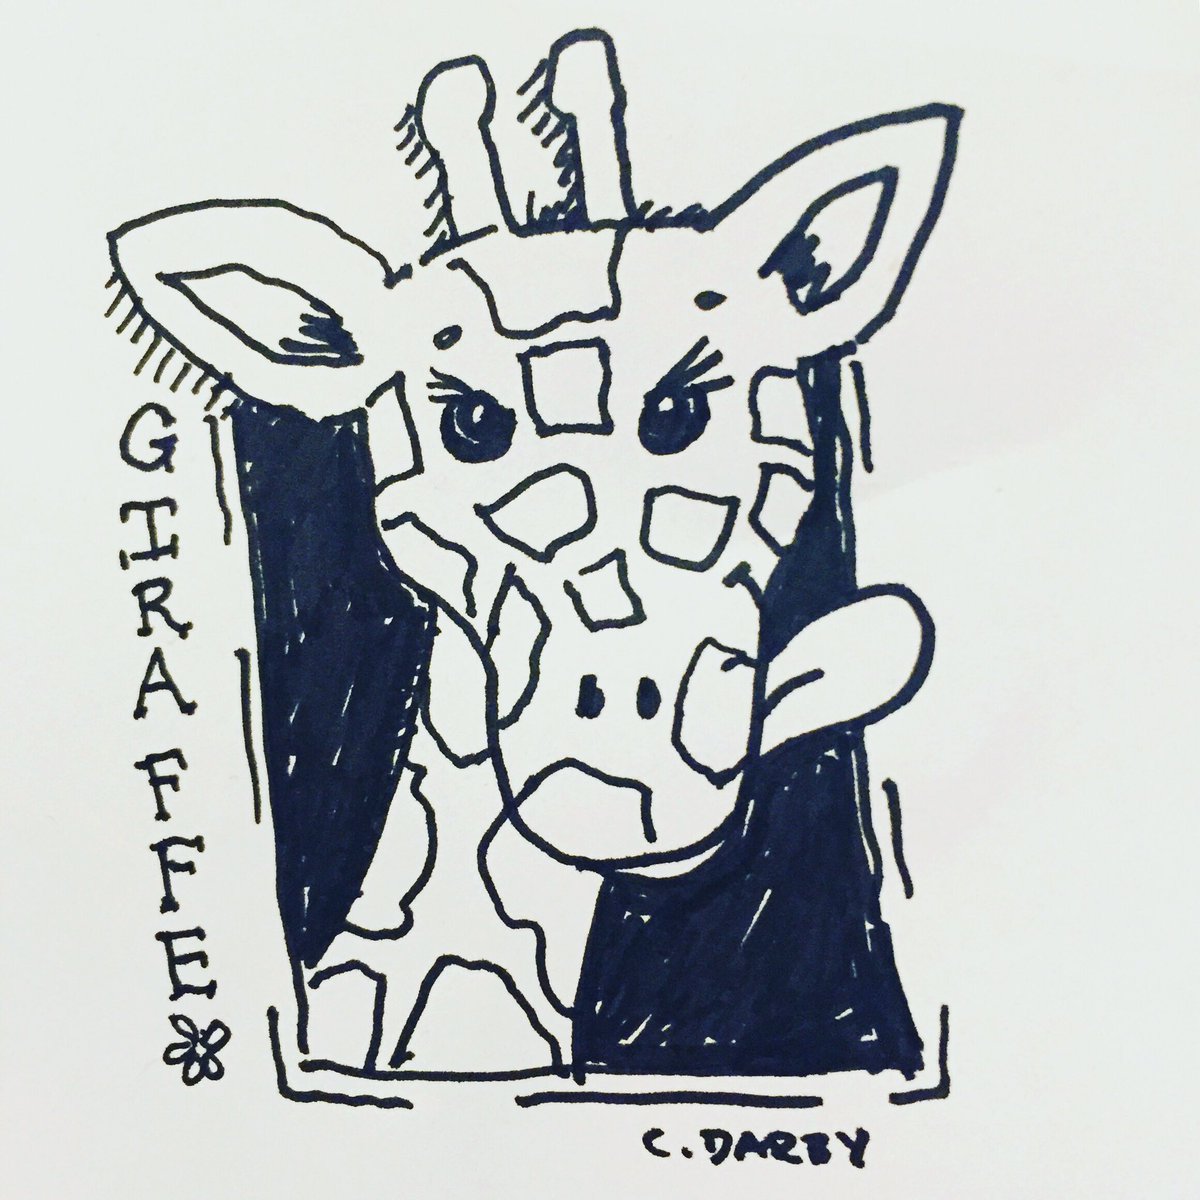 Giraffe... Daily doodle...
#illustratorsontwitter #artistsoftwitter #illustration 
#kidlit #kidlitart #kidlitartist #illustration #scbwi #childrensillustration #kidlitagent #childrensbooks #artistsontwitter #kidsbooks  
#Dailysketchbook
#sketch #ink #dailydoodle 
#giraffe